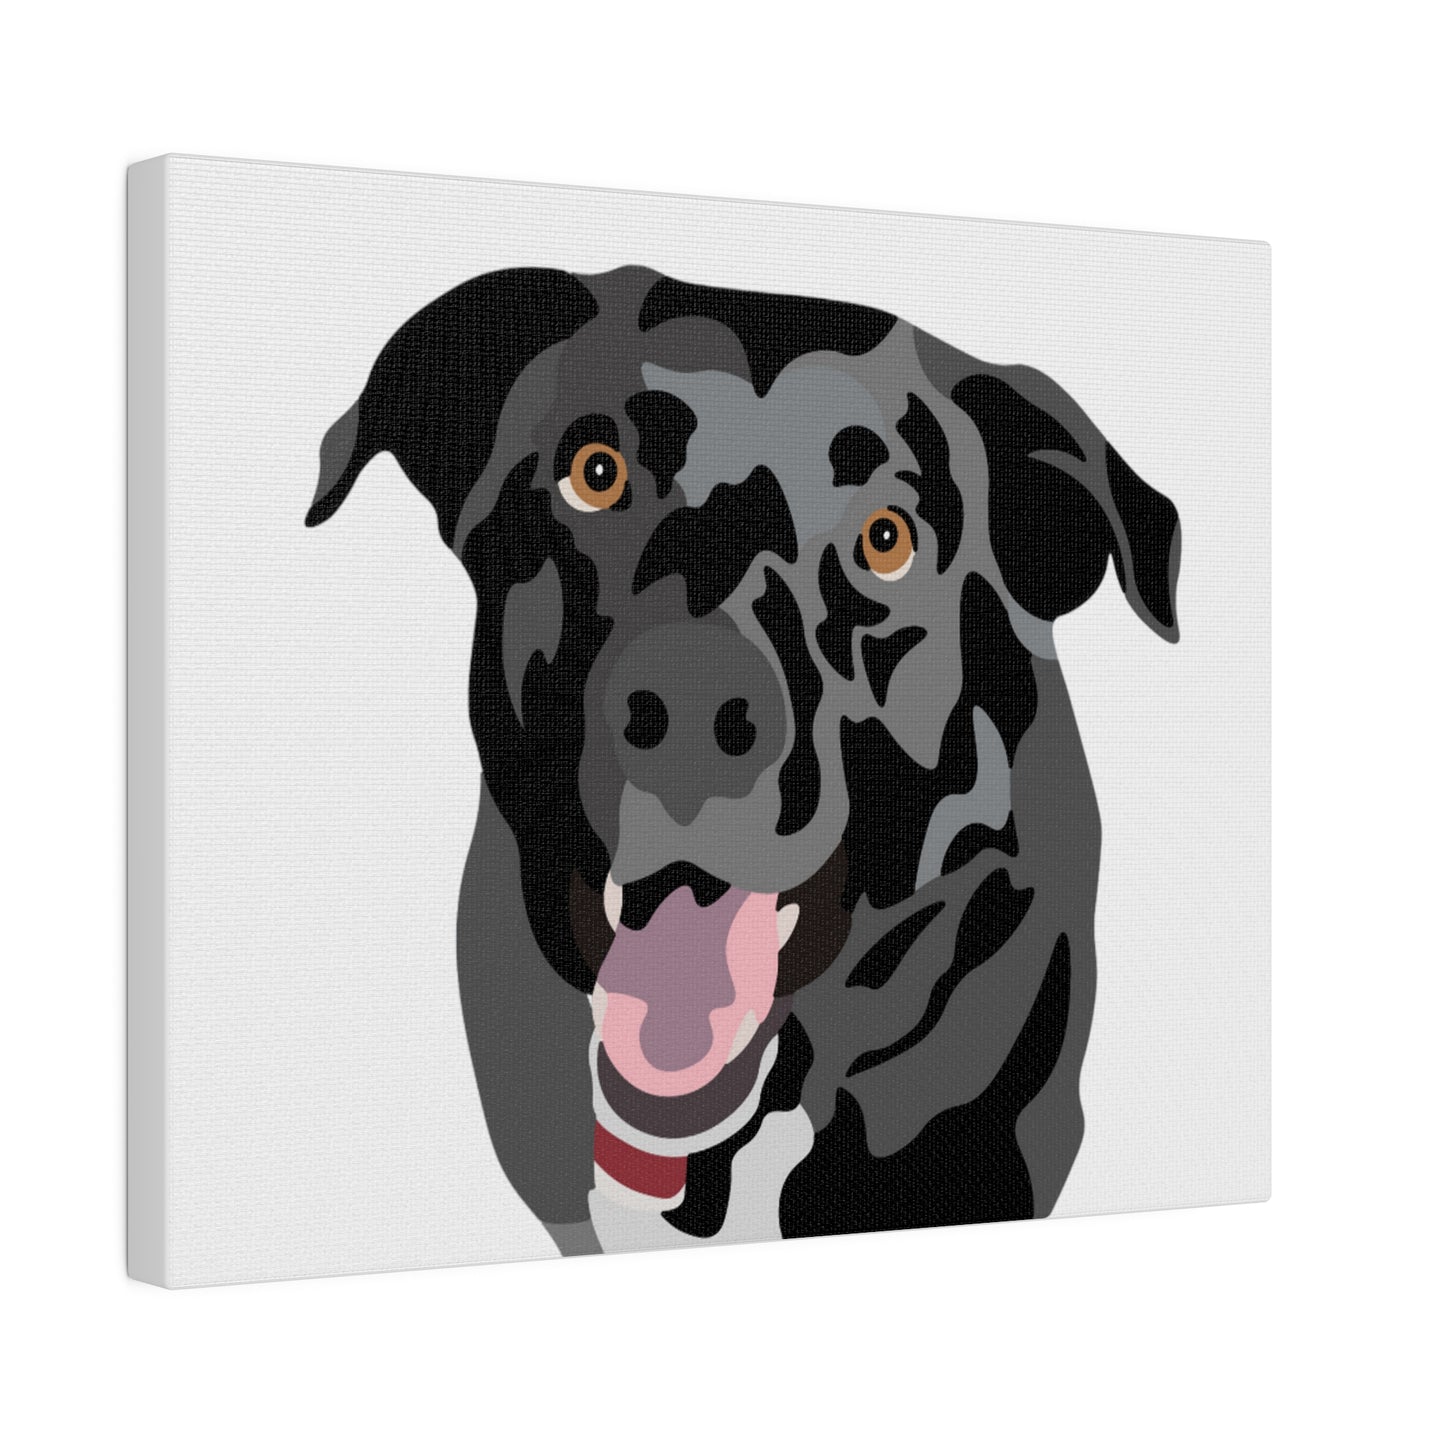 One Pet Portrait on Canvas | White Background | Custom Hand-Drawn Pet Portrait in Cartoon-Realism Style